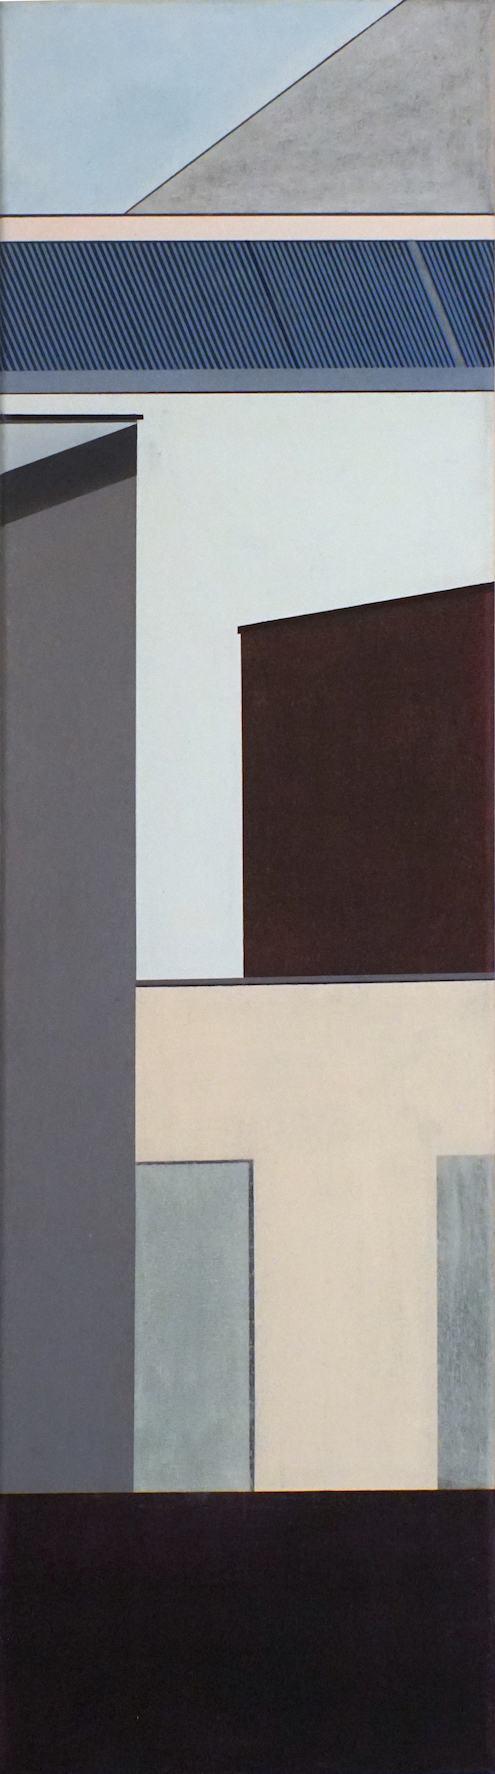 Berlin-Weissensee I, 2021, 110 x 30 cm, Öl/Lw, Oil on canvas